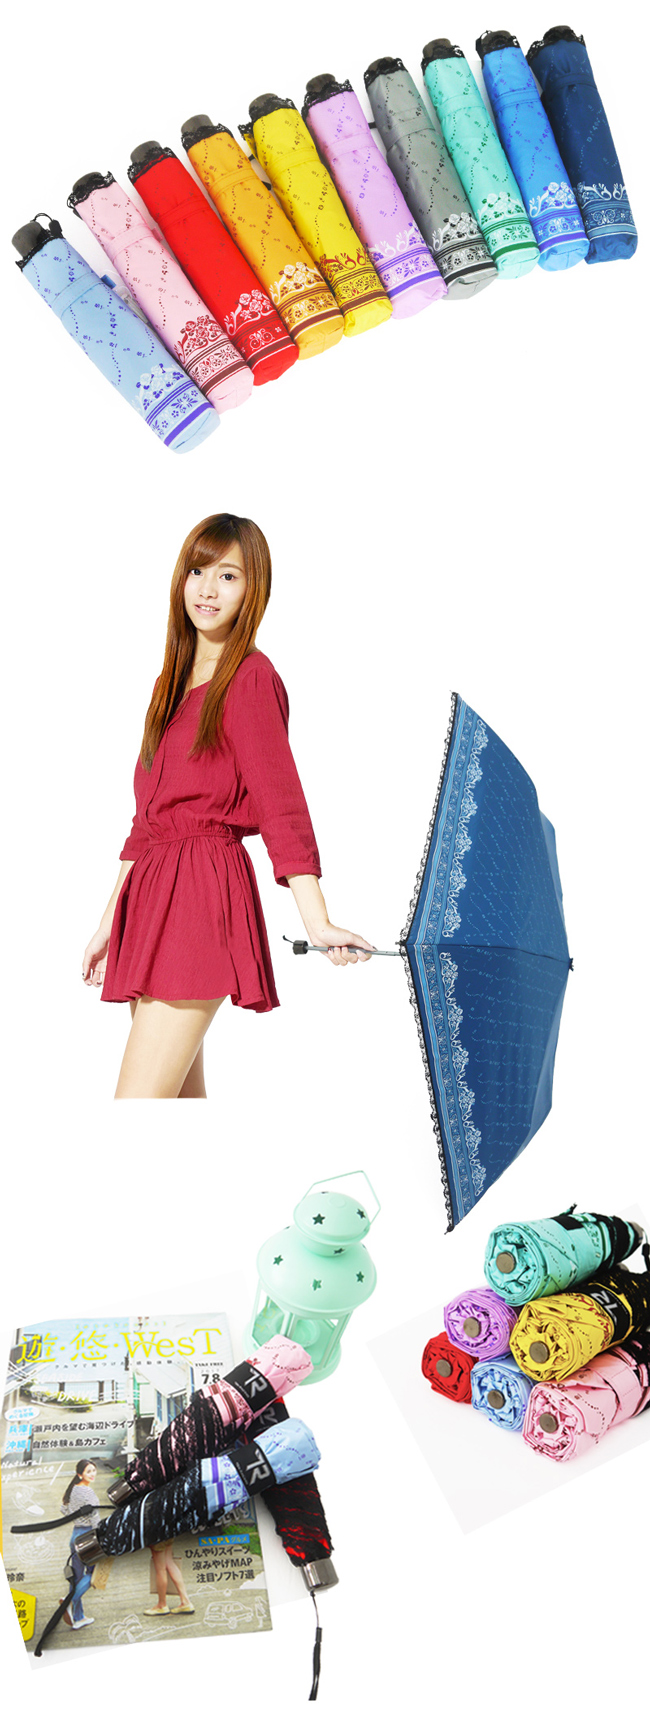 【TDN】降溫14度凡爾賽薔薇黑膠超輕量折傘/口紅傘/晴雨傘 B6245B